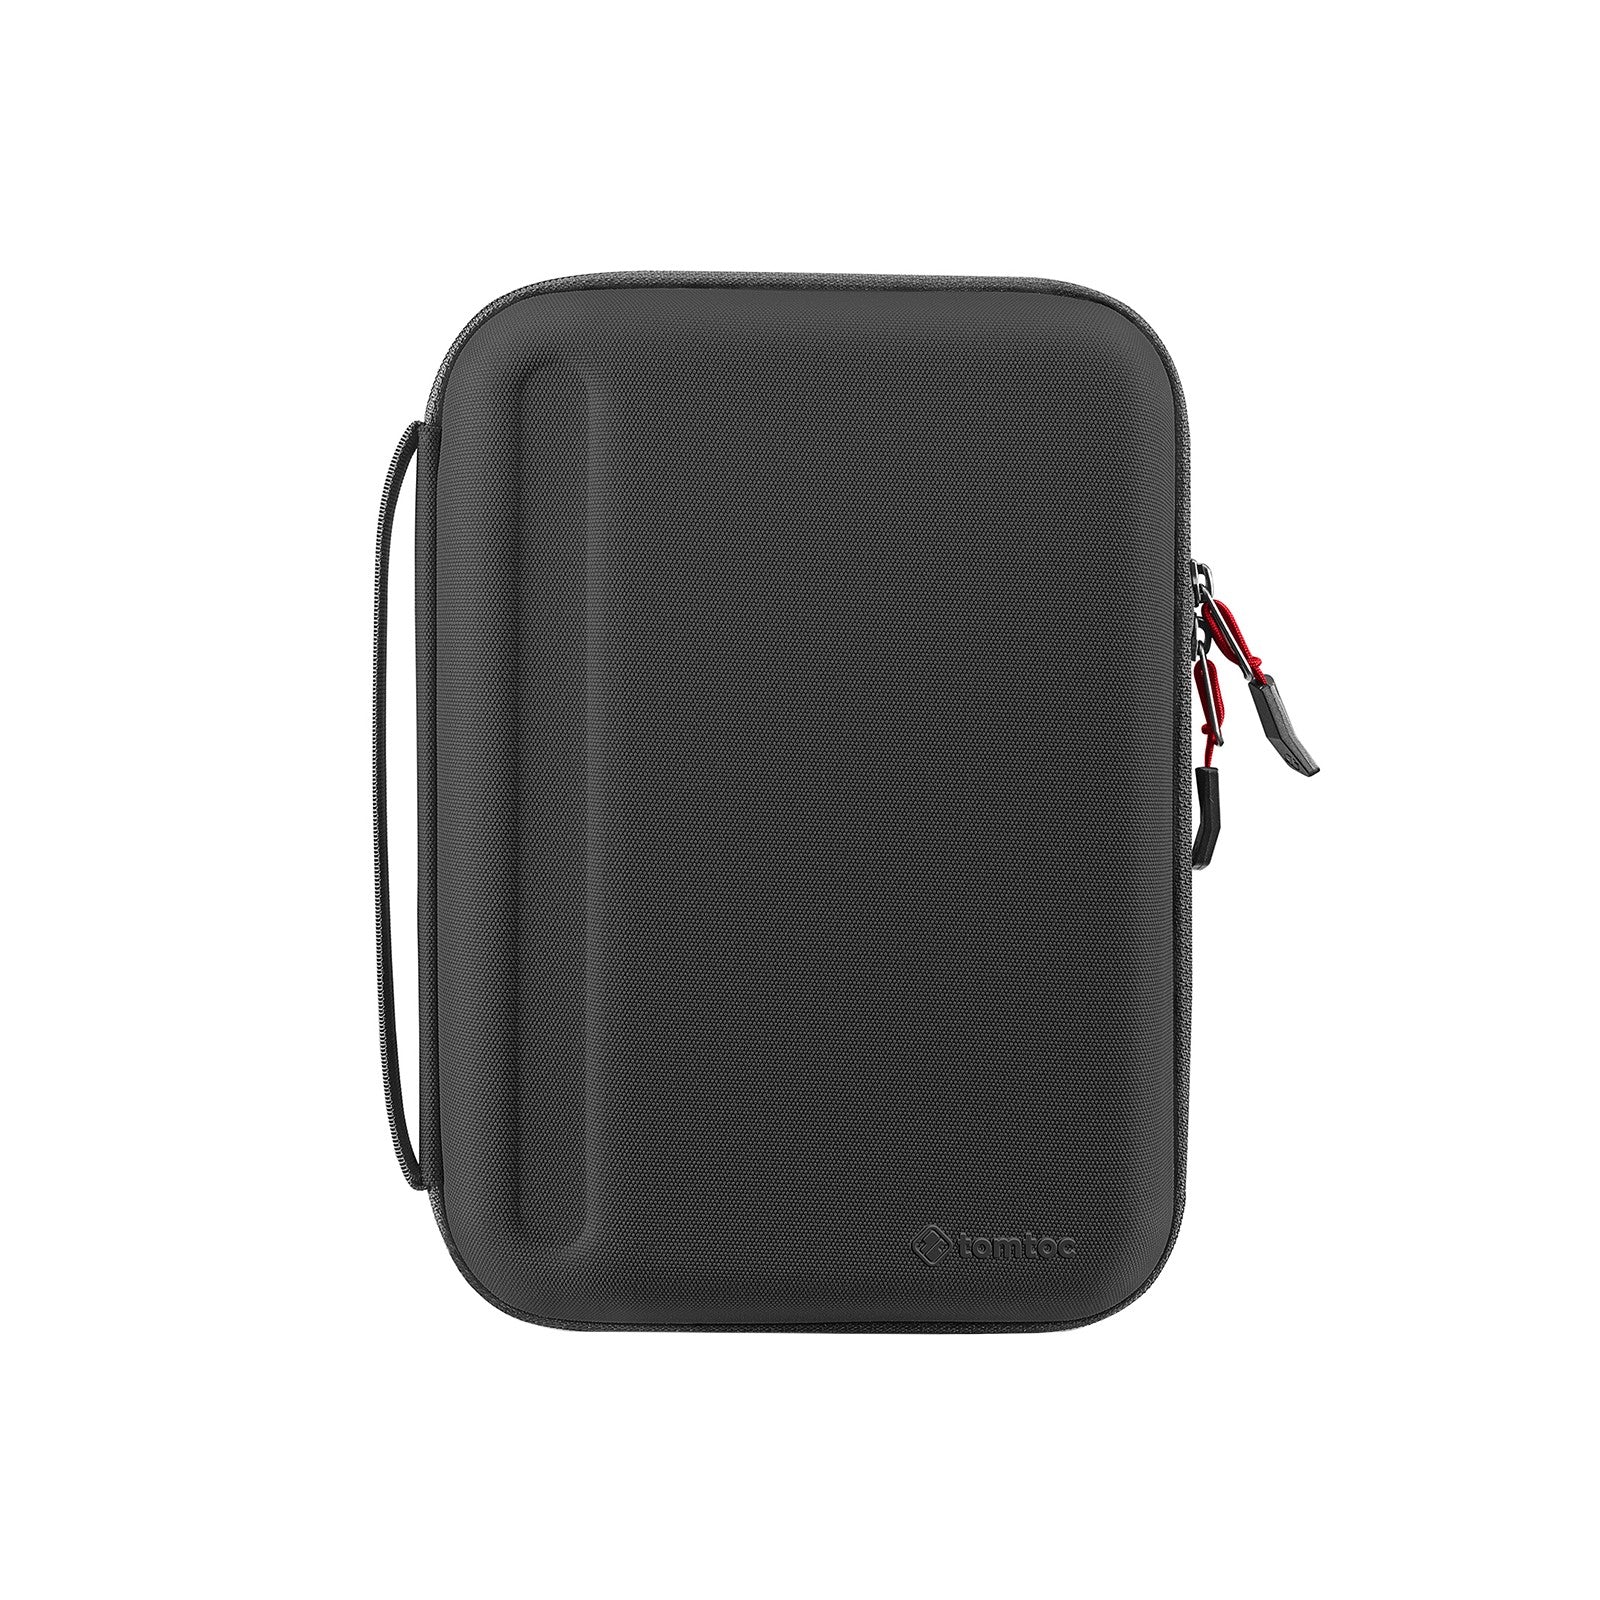 FancyCase-B06 Portfolio iPad Case for 11-inch / 12.9 inch iPad Air/Pro